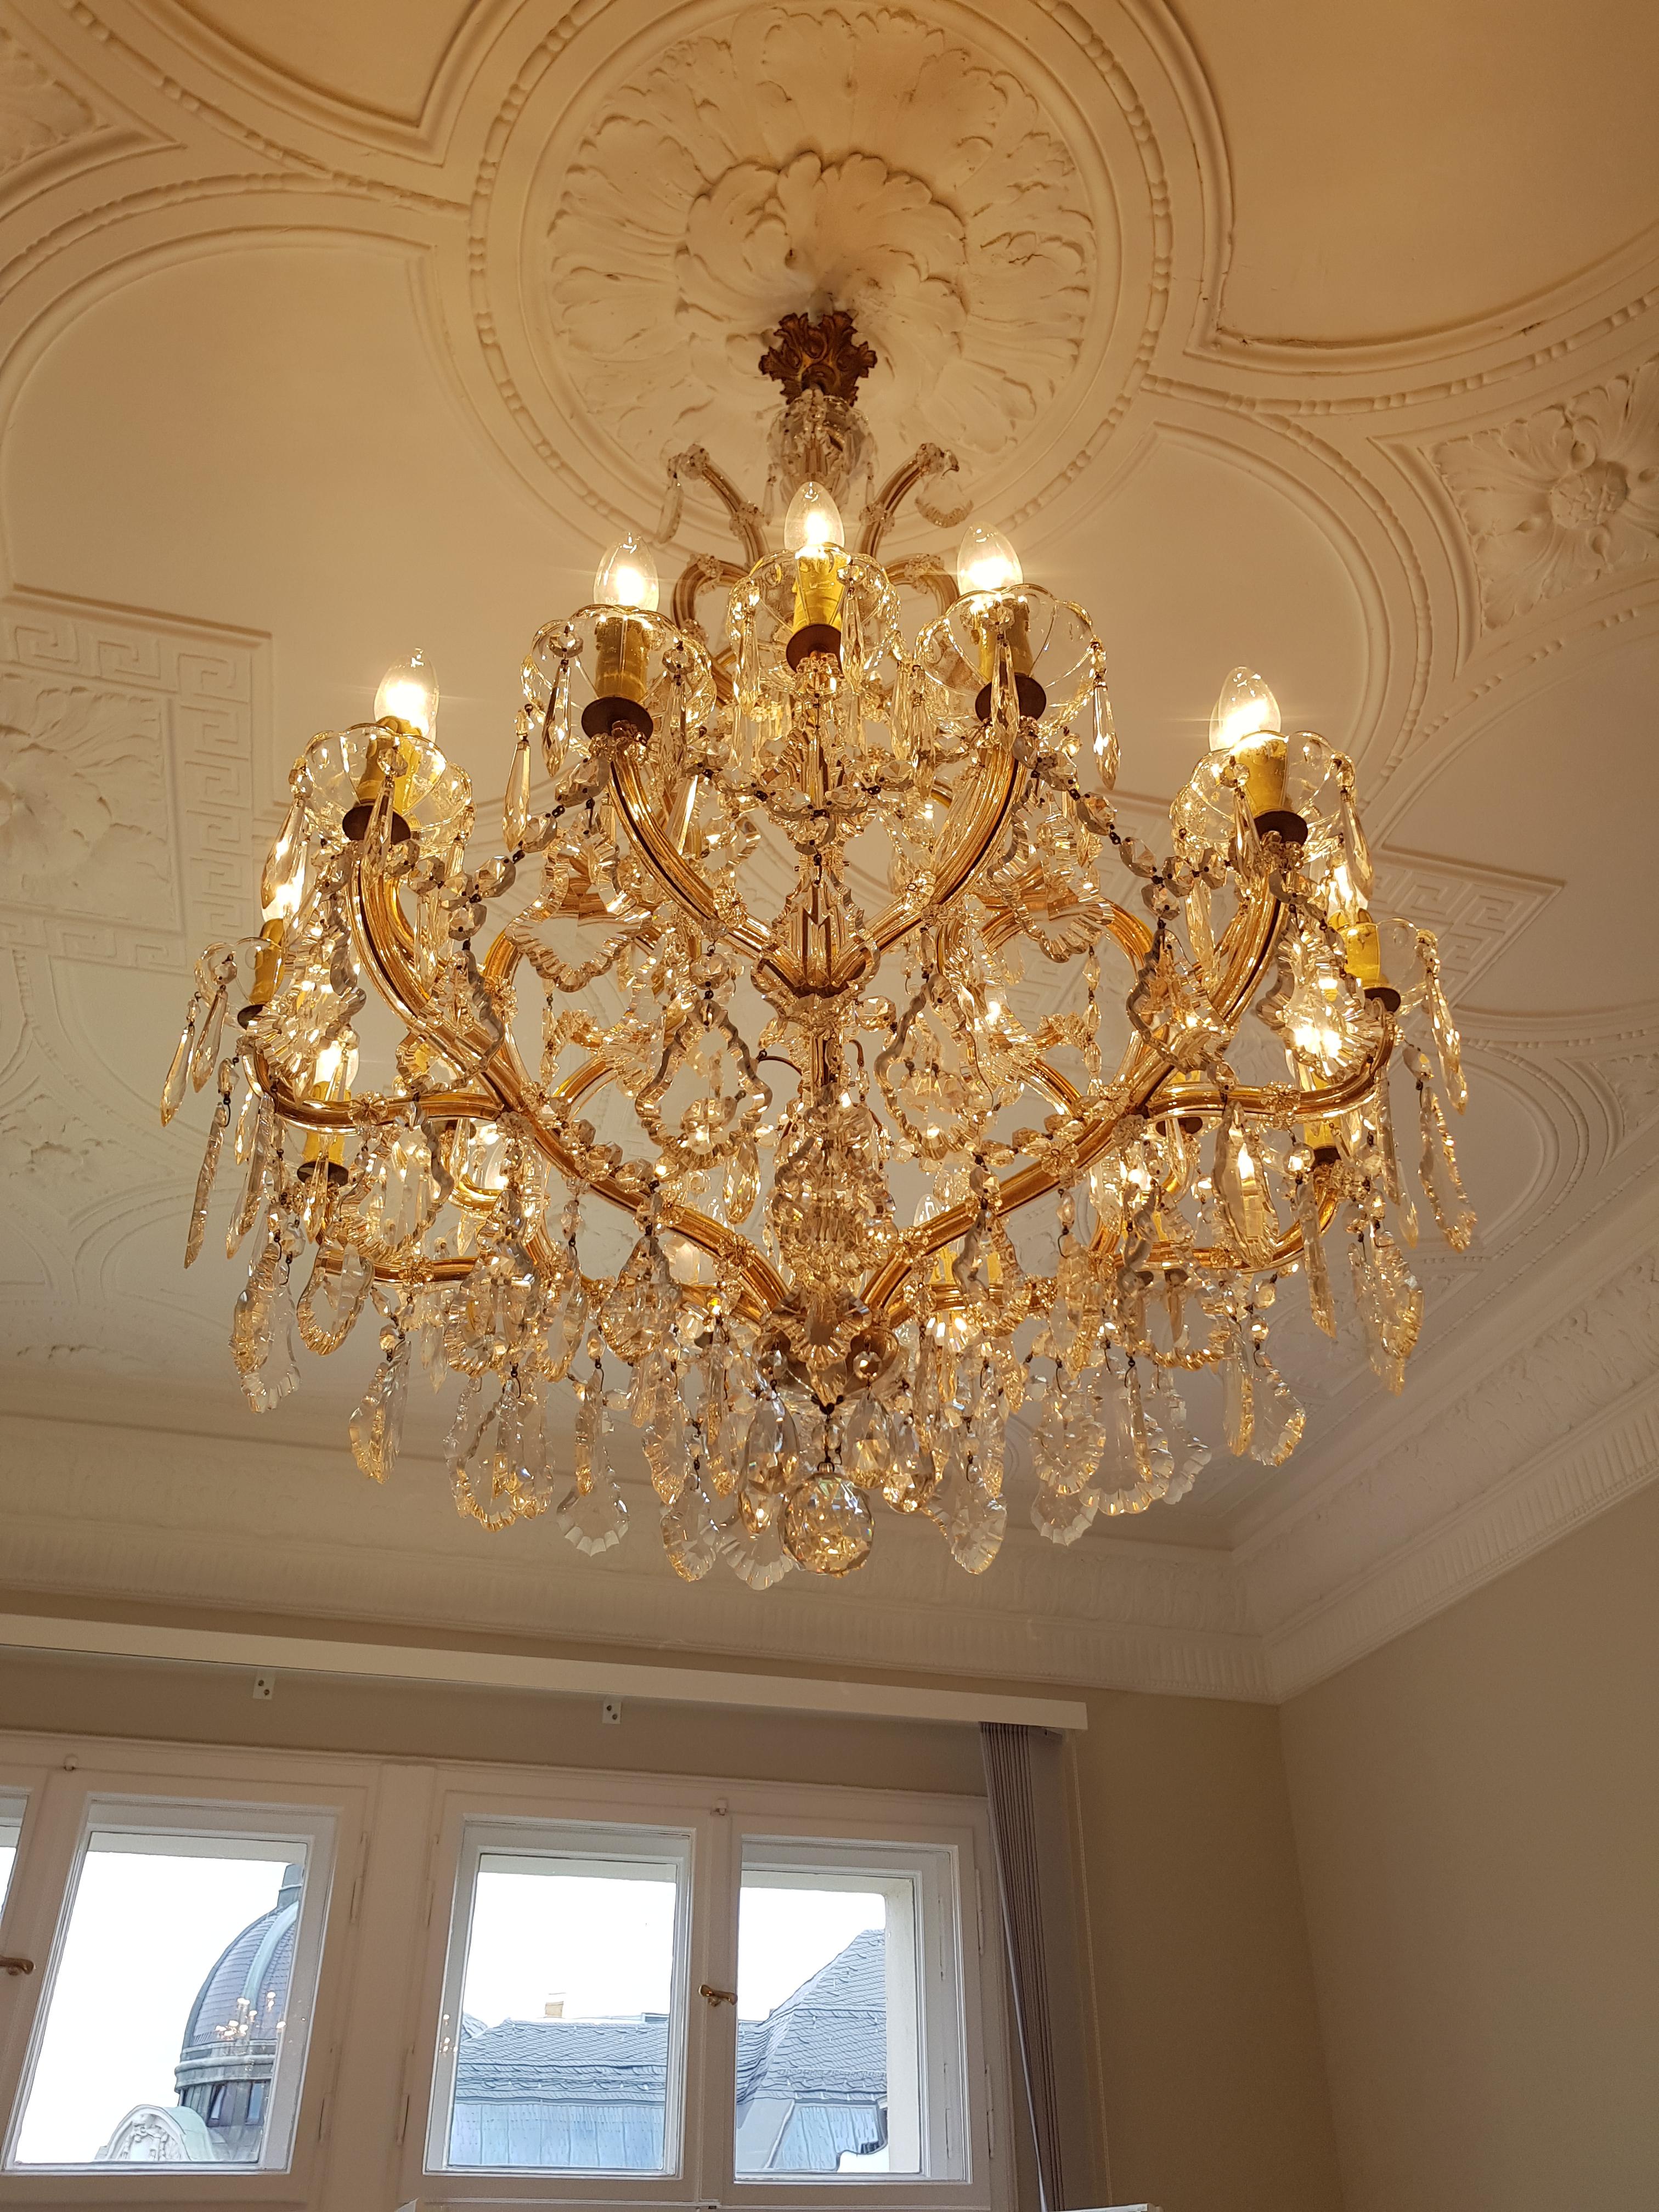 Nineteen-Light Maria Theresa Chandelier Antique Ceiling Lamp Lustre Art Nouveau (Barock)